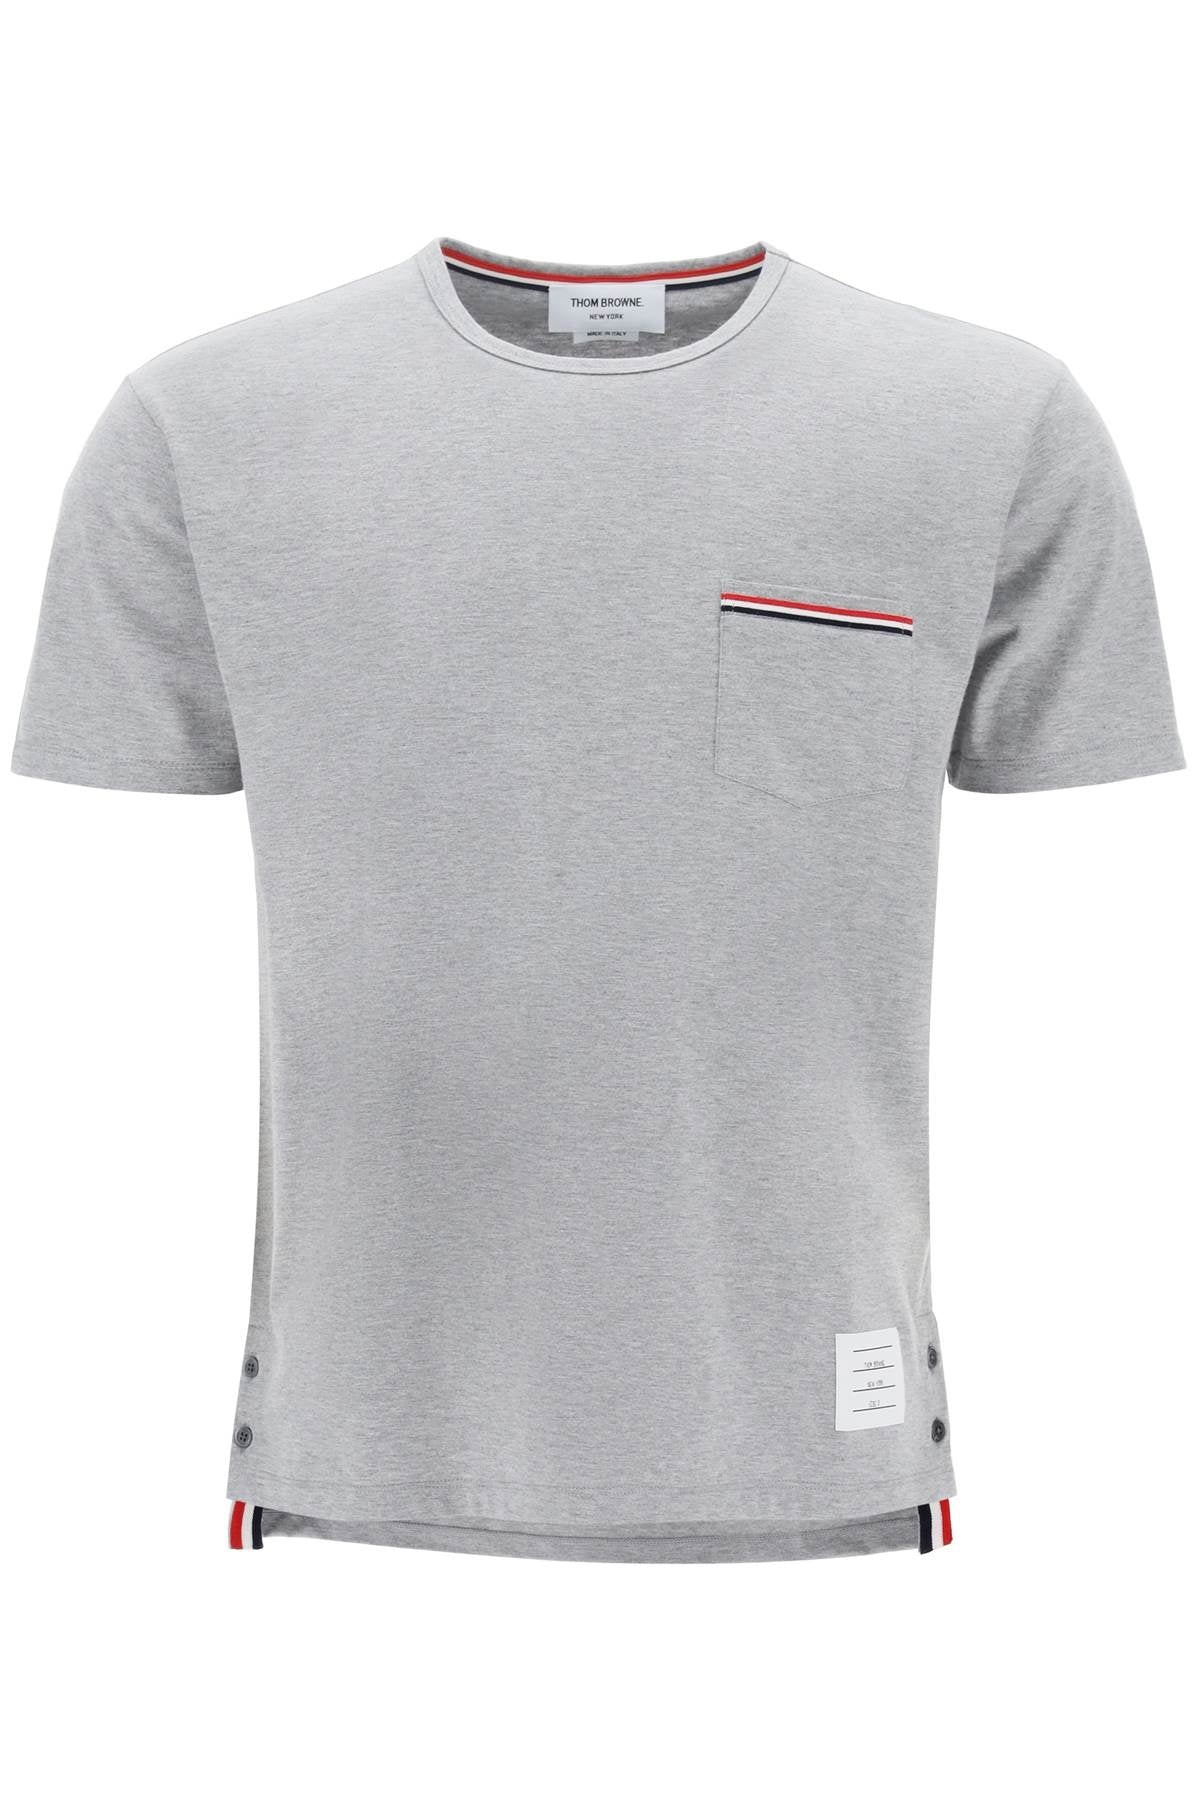 Thom Browne Rwb Pocket T-Shirt Men - 1